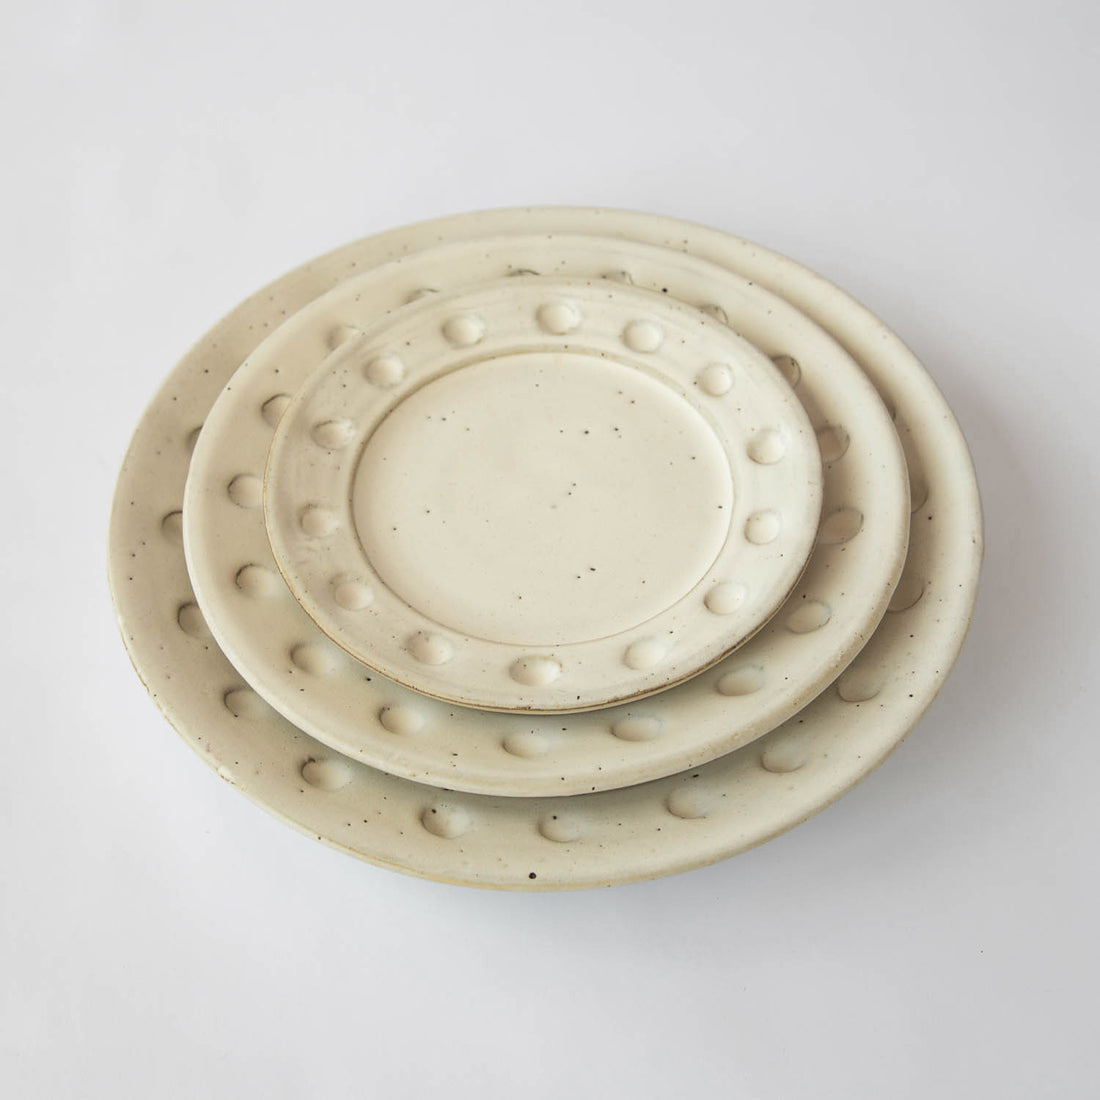 White Clay Plate - Medium (Set of 2)